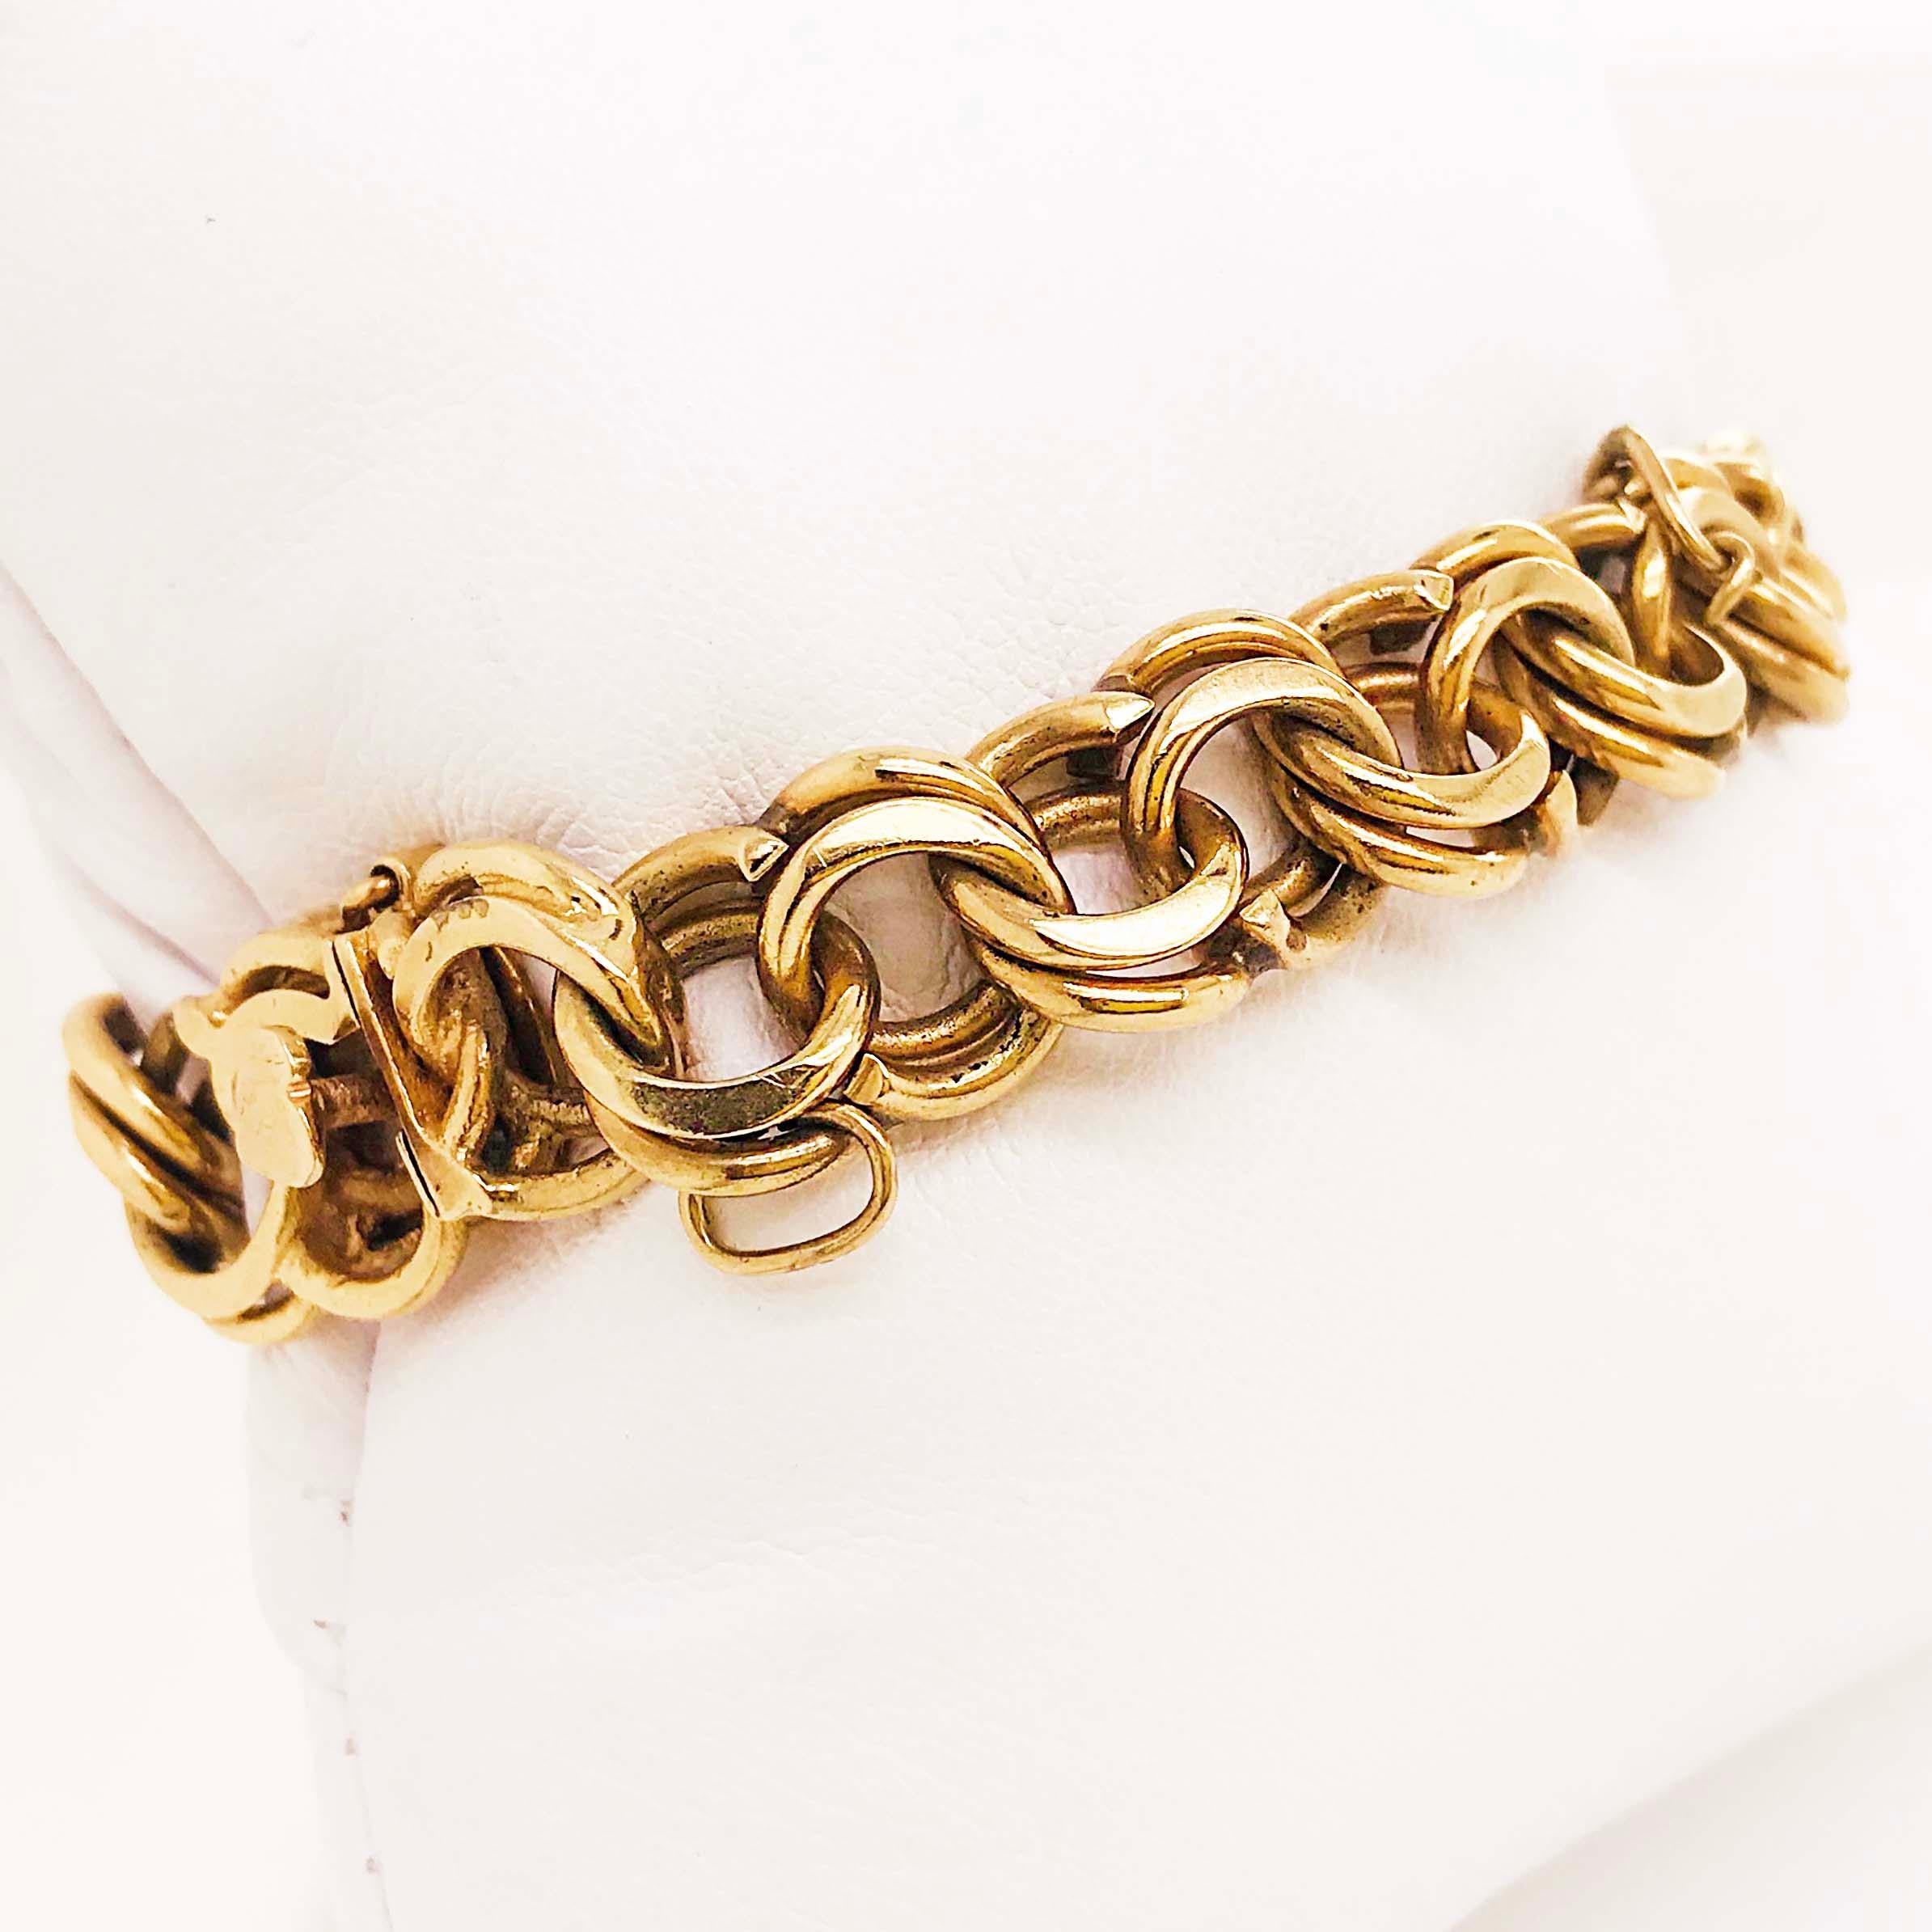 Heavy Gold Charm Bracelet, 14 Karat Large Gold Chain Bracelet 2